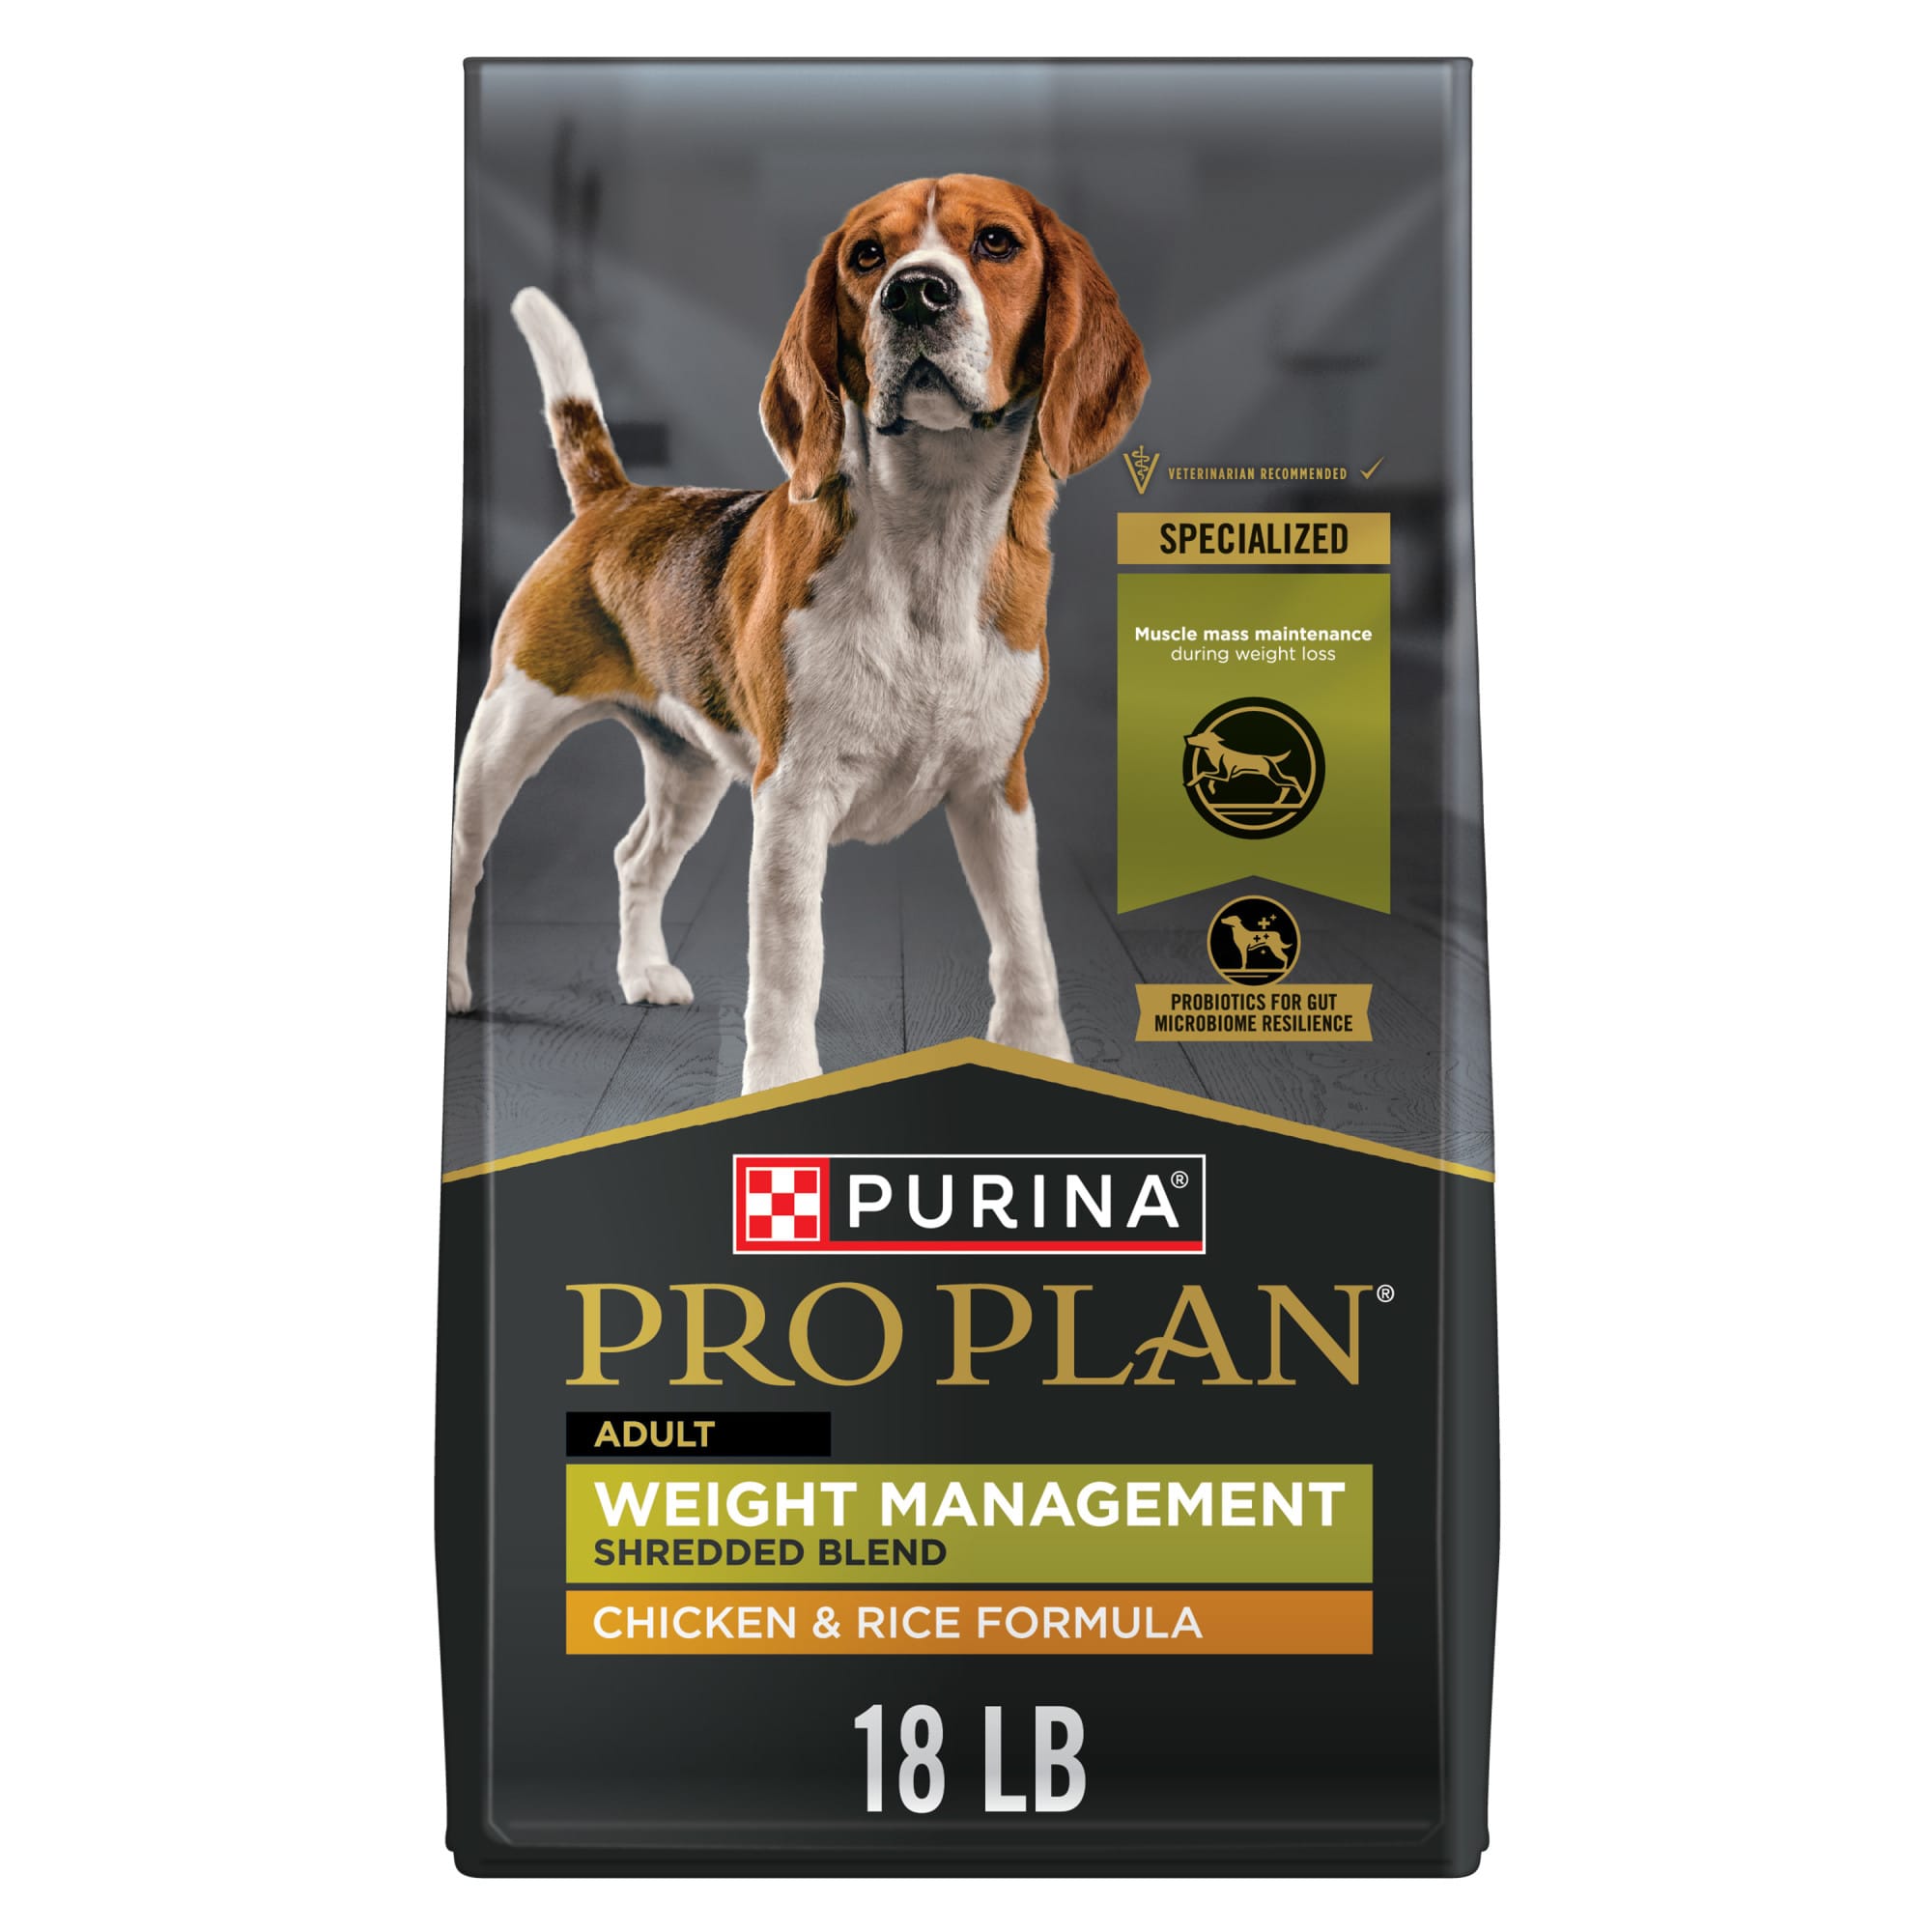 purina-pro-plan-shredded-blend-weight-management-chicken-rice-formula